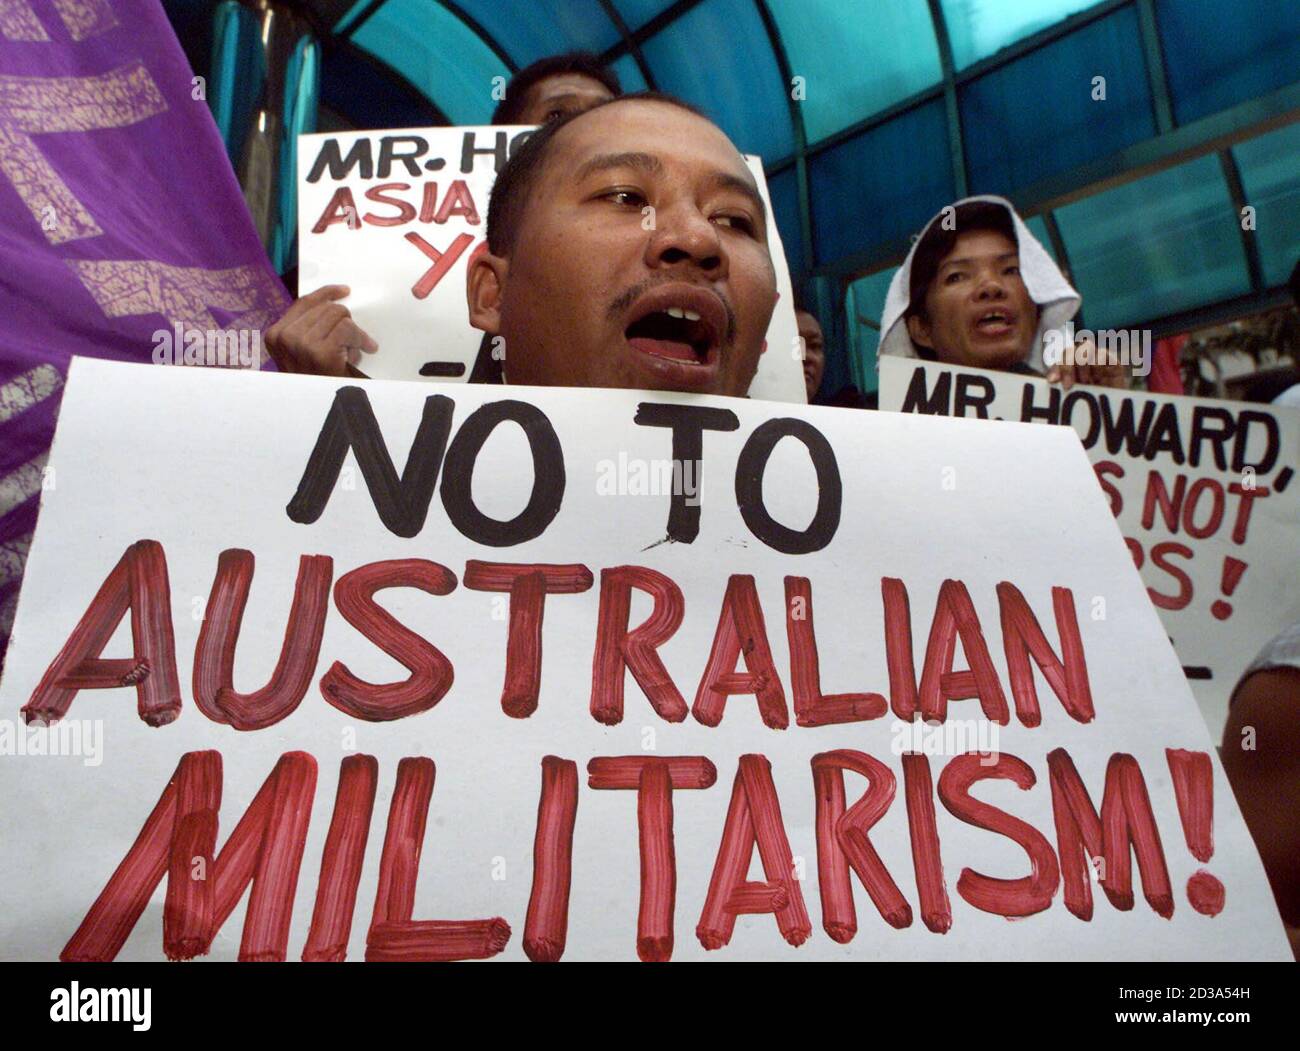 FILIPINO ACTIVISTS CHANT ANTI-AUSTRALIAN SLOGANS DURING A PROTEST OUTSIDE  THE AUSTRALIAN EMBASSY IN MANILA Stock Photo - Alamy